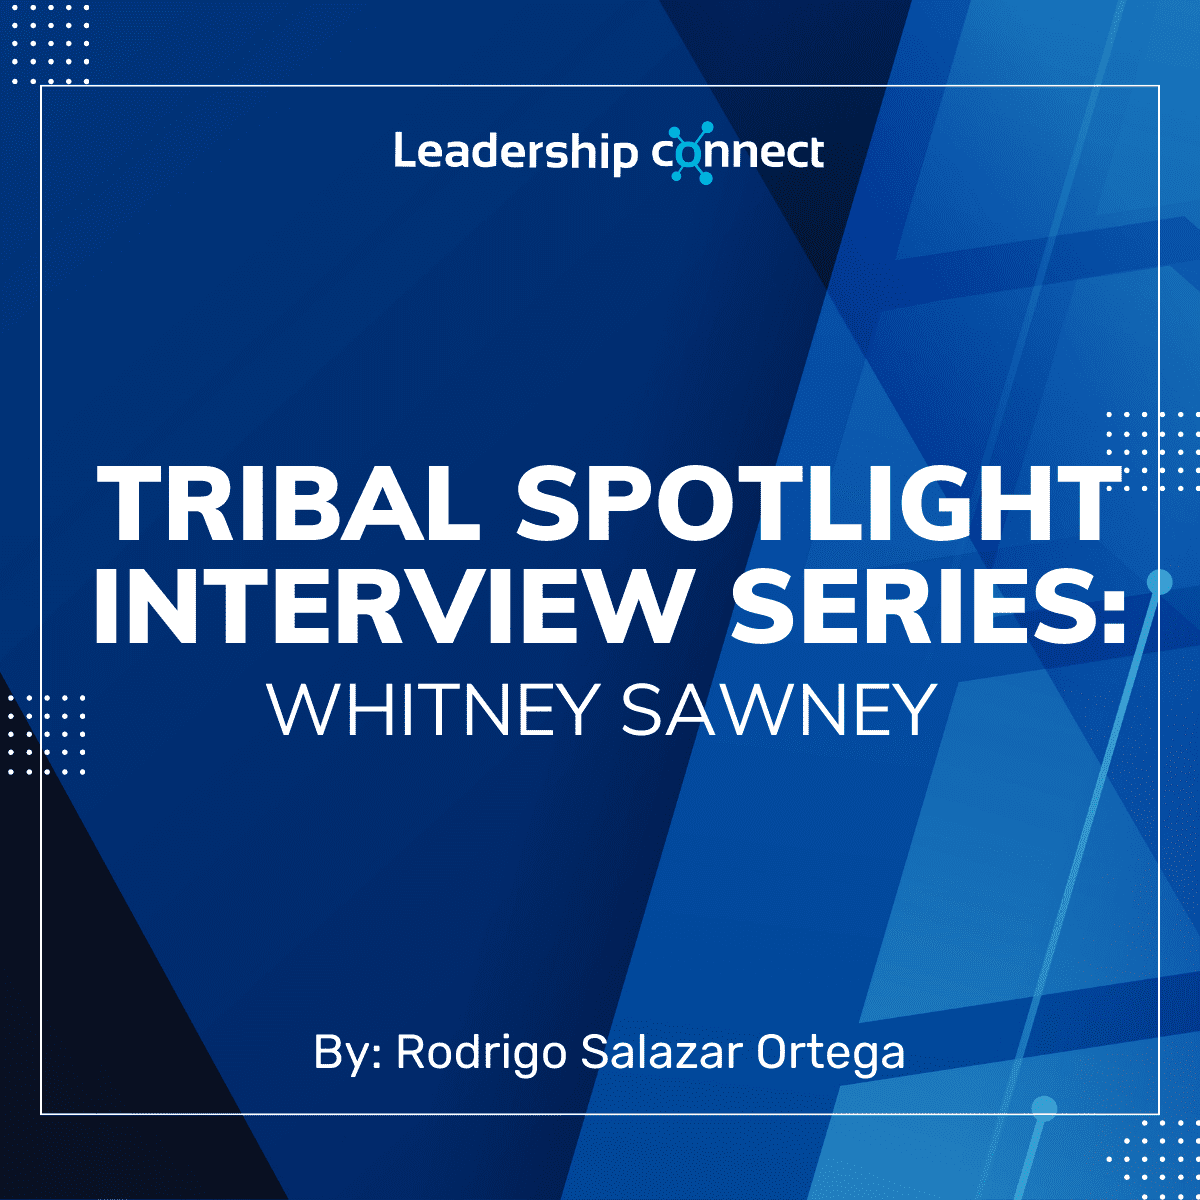 Tribal Spotlight Interview Series with Whitney Sawney